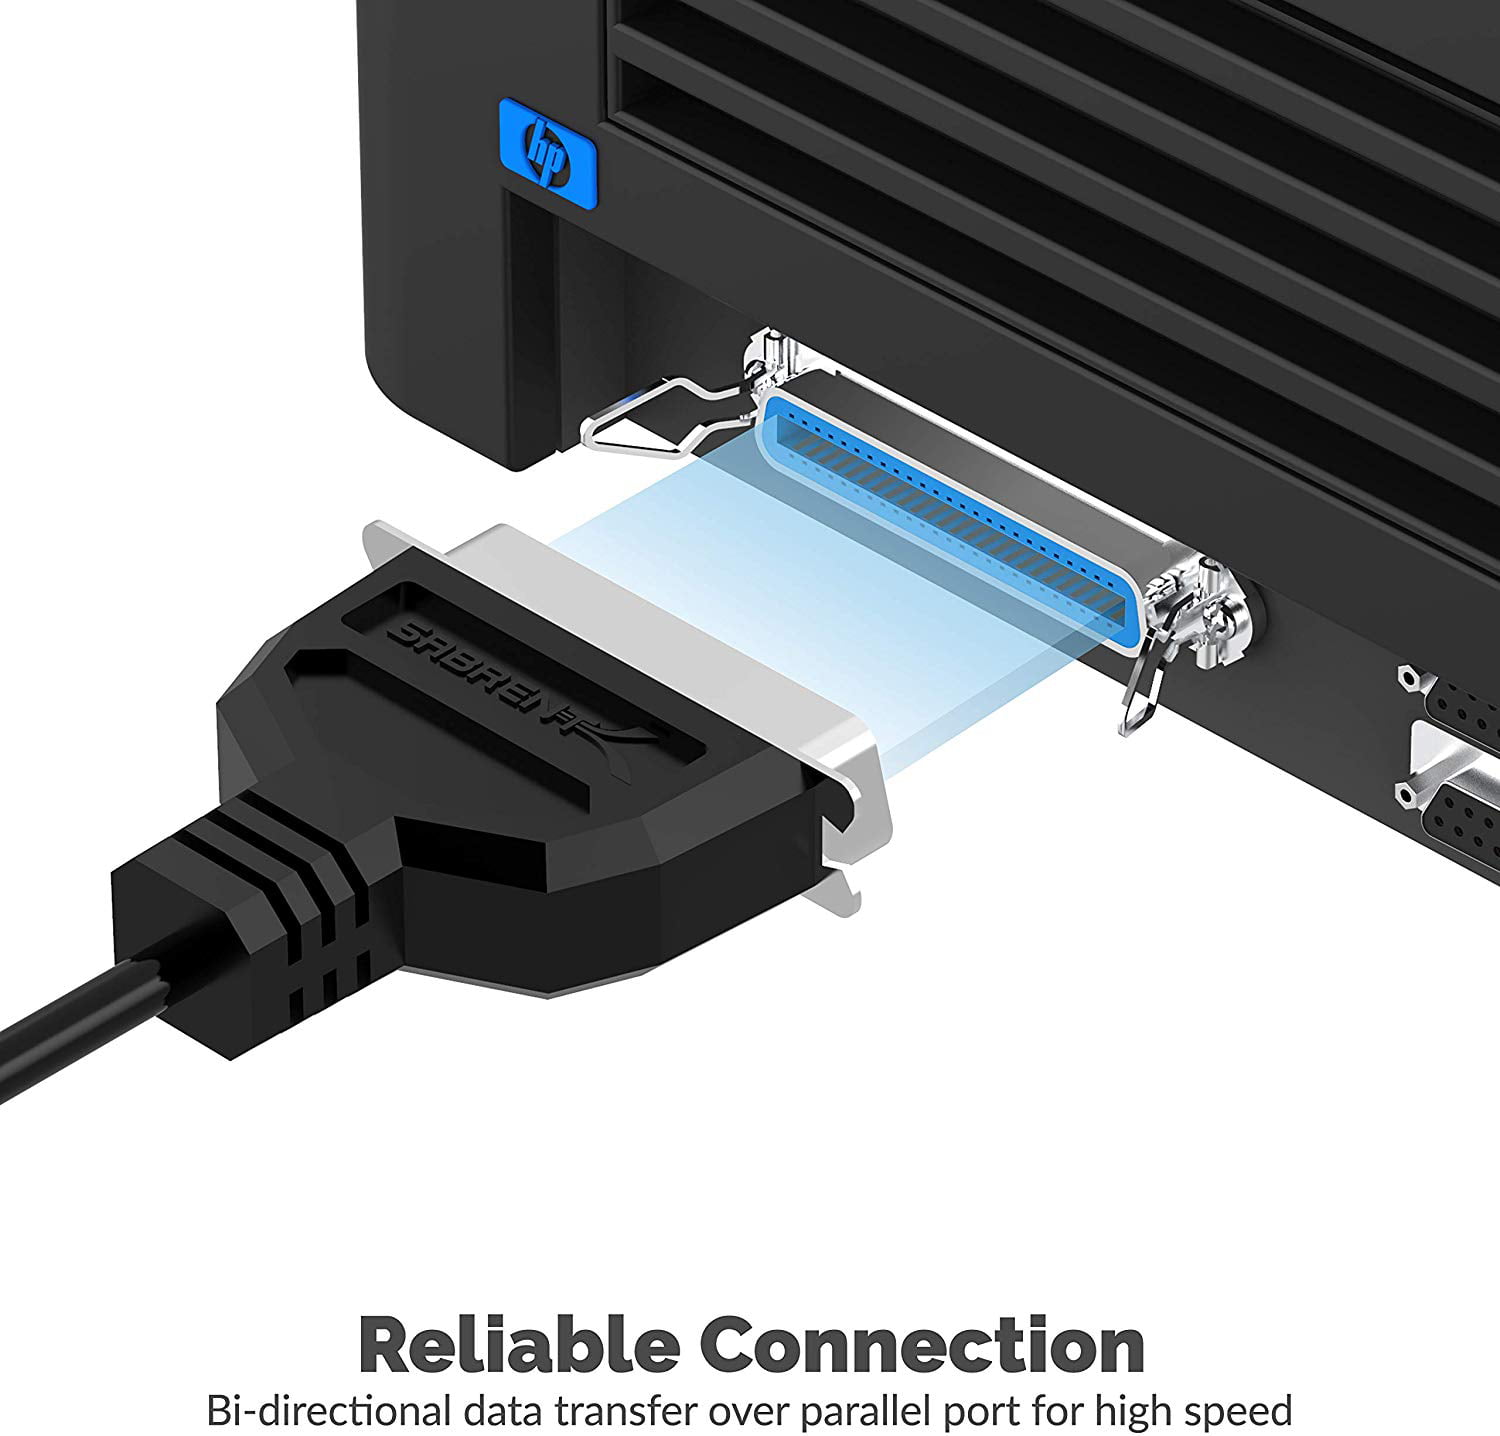 Câble Adaptateur USB Vers Imprimante Centro 36 IEEE 1284 - 1.80 M